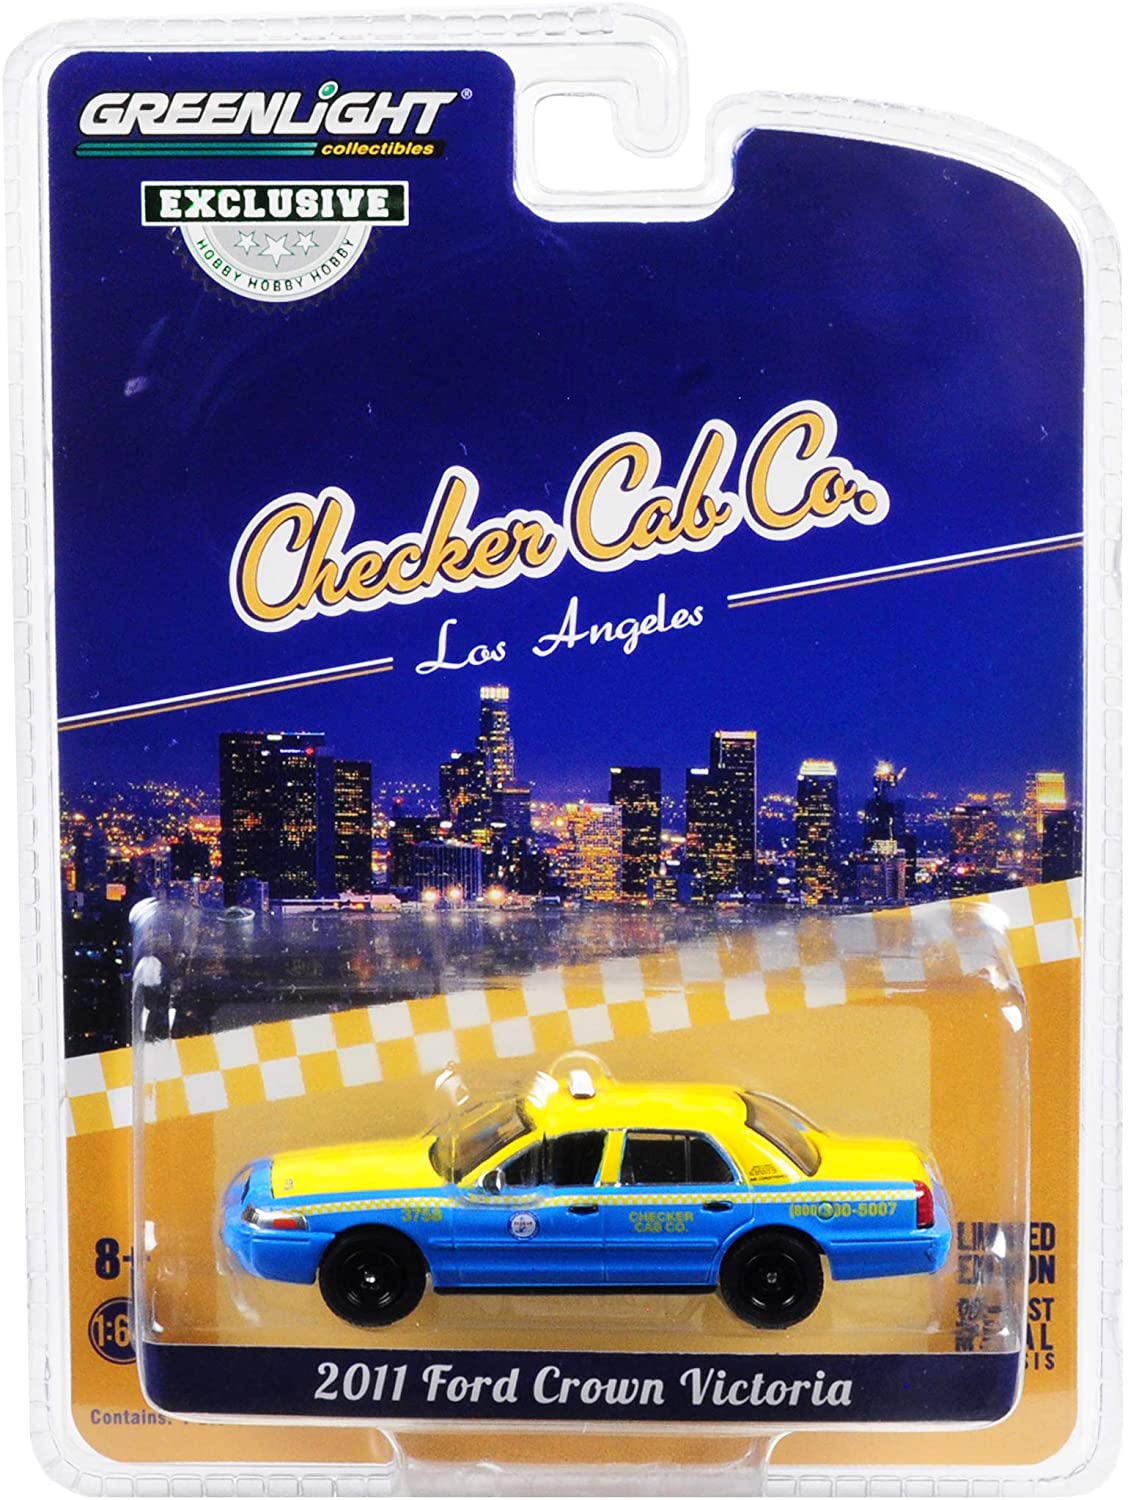 GreenLight 1/64 2011 Ford Crown Victoria Checker Cab Co. Taxi City